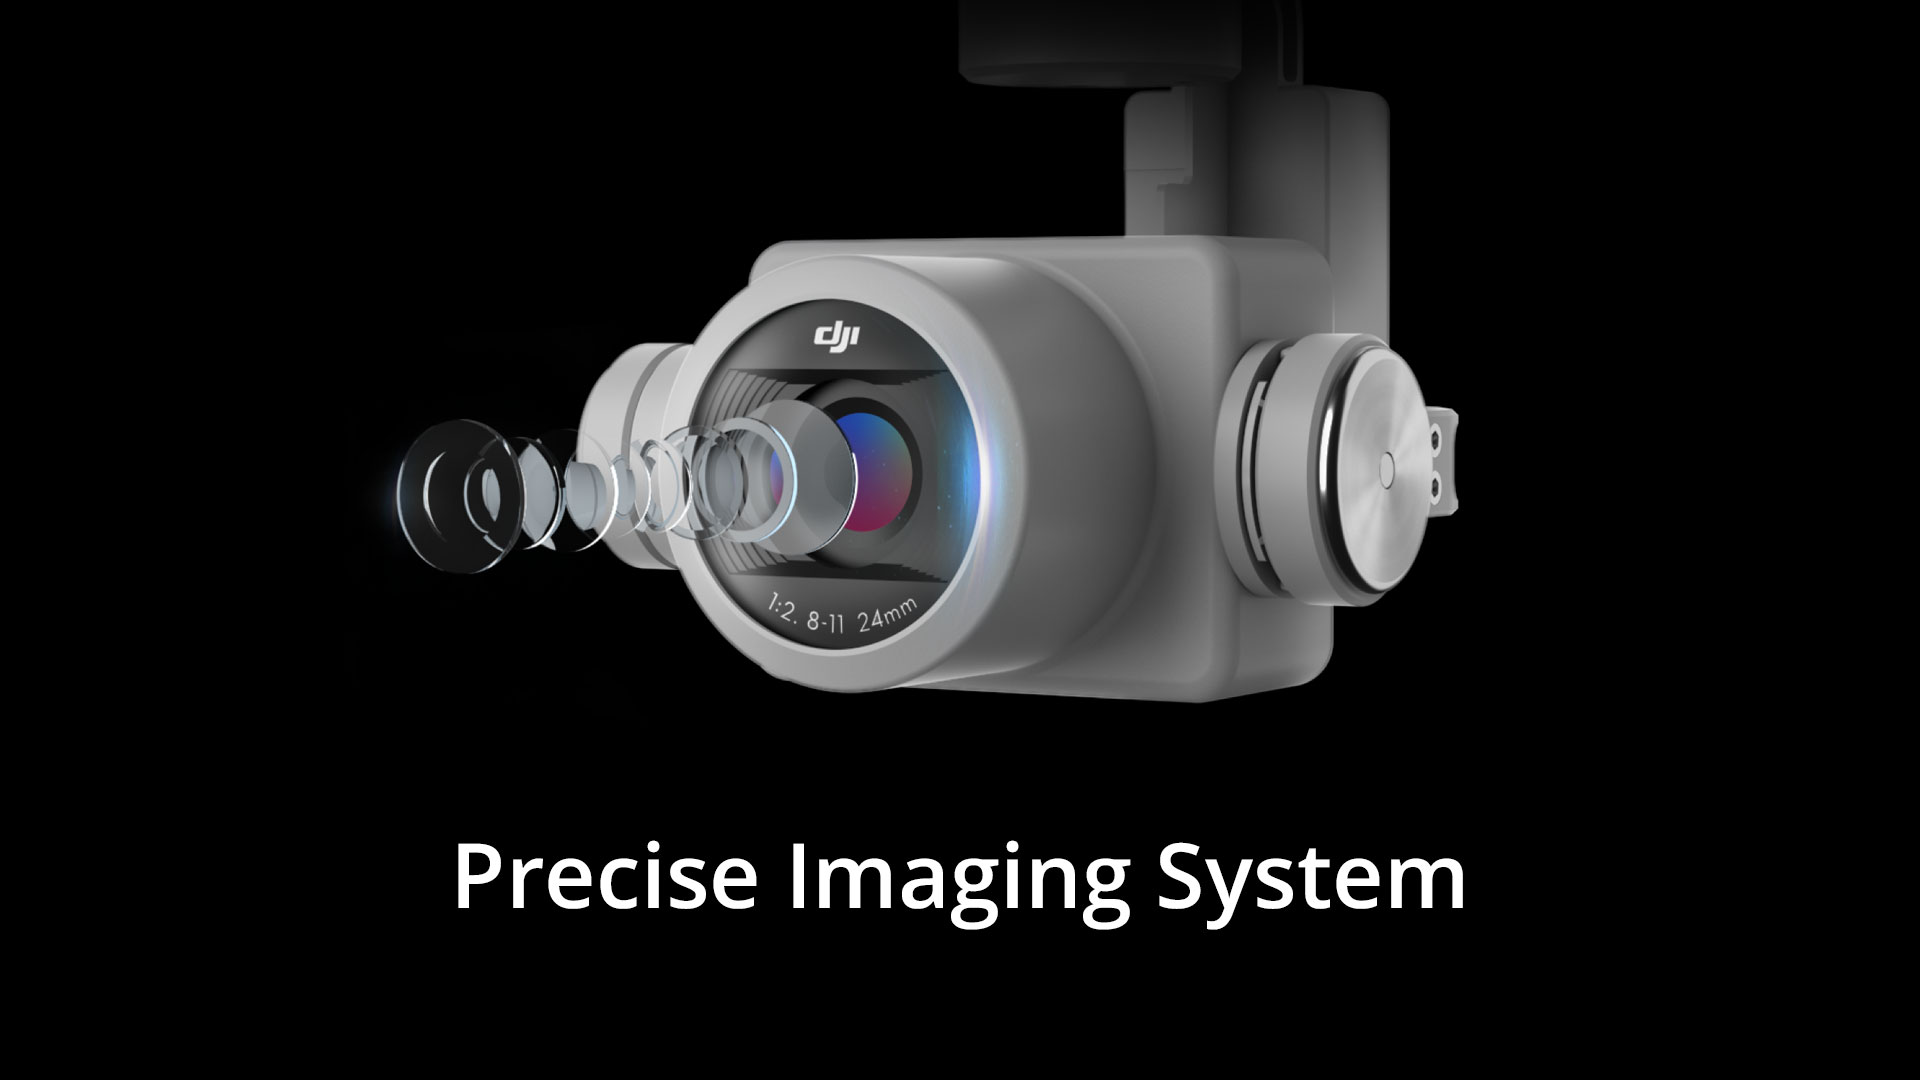 DJI Phantom 4 RTK Precise Imaging System